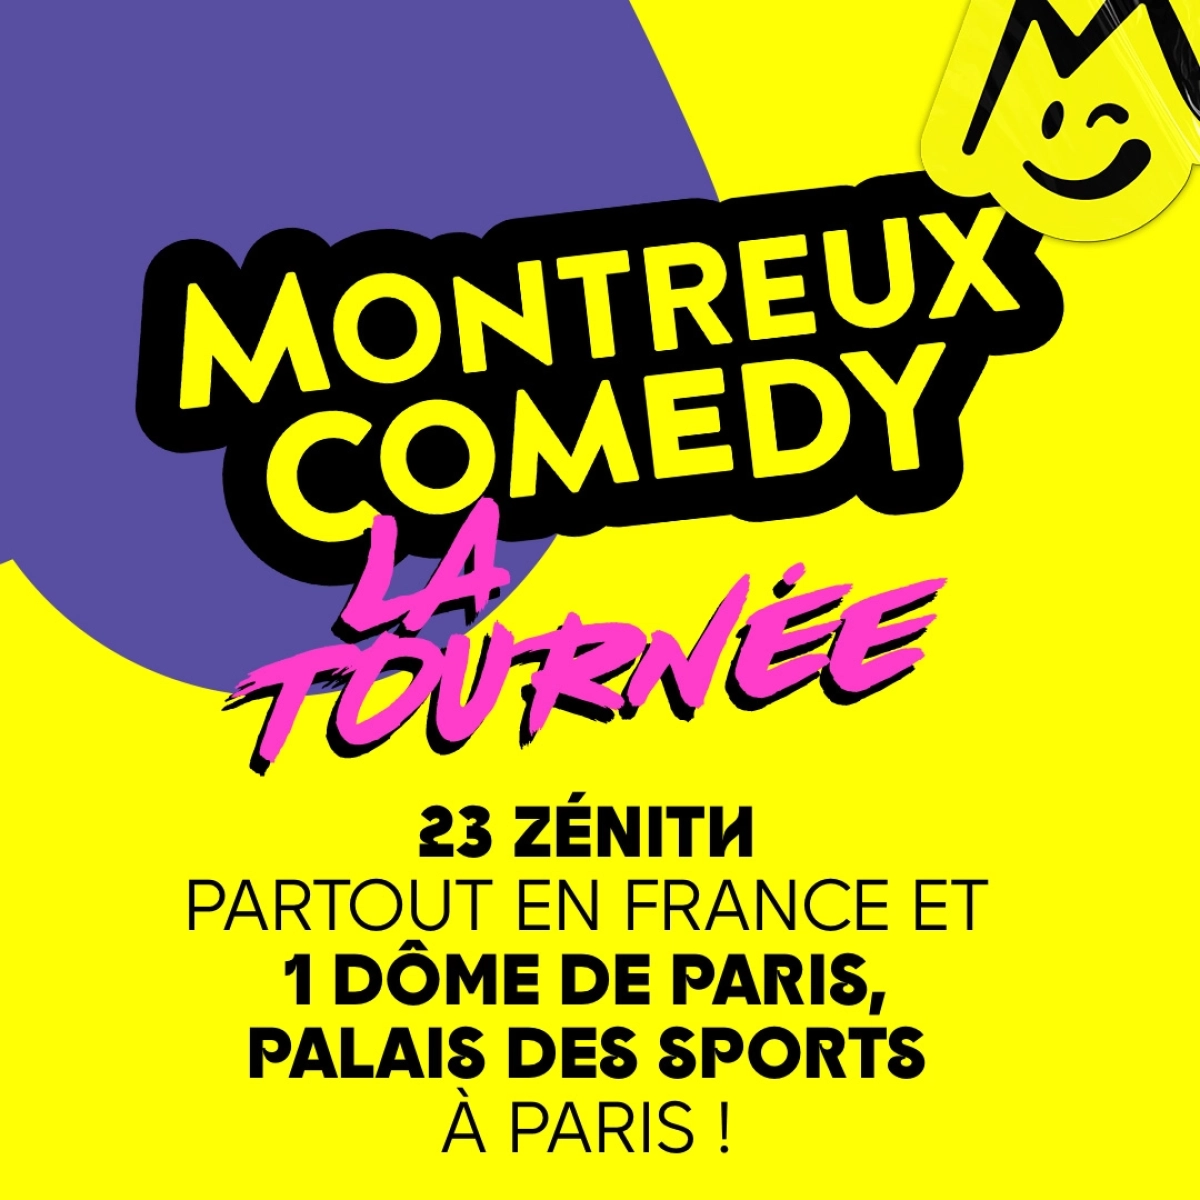 Montreux Comedy - La Tournee al Zenith Strasbourg Tickets